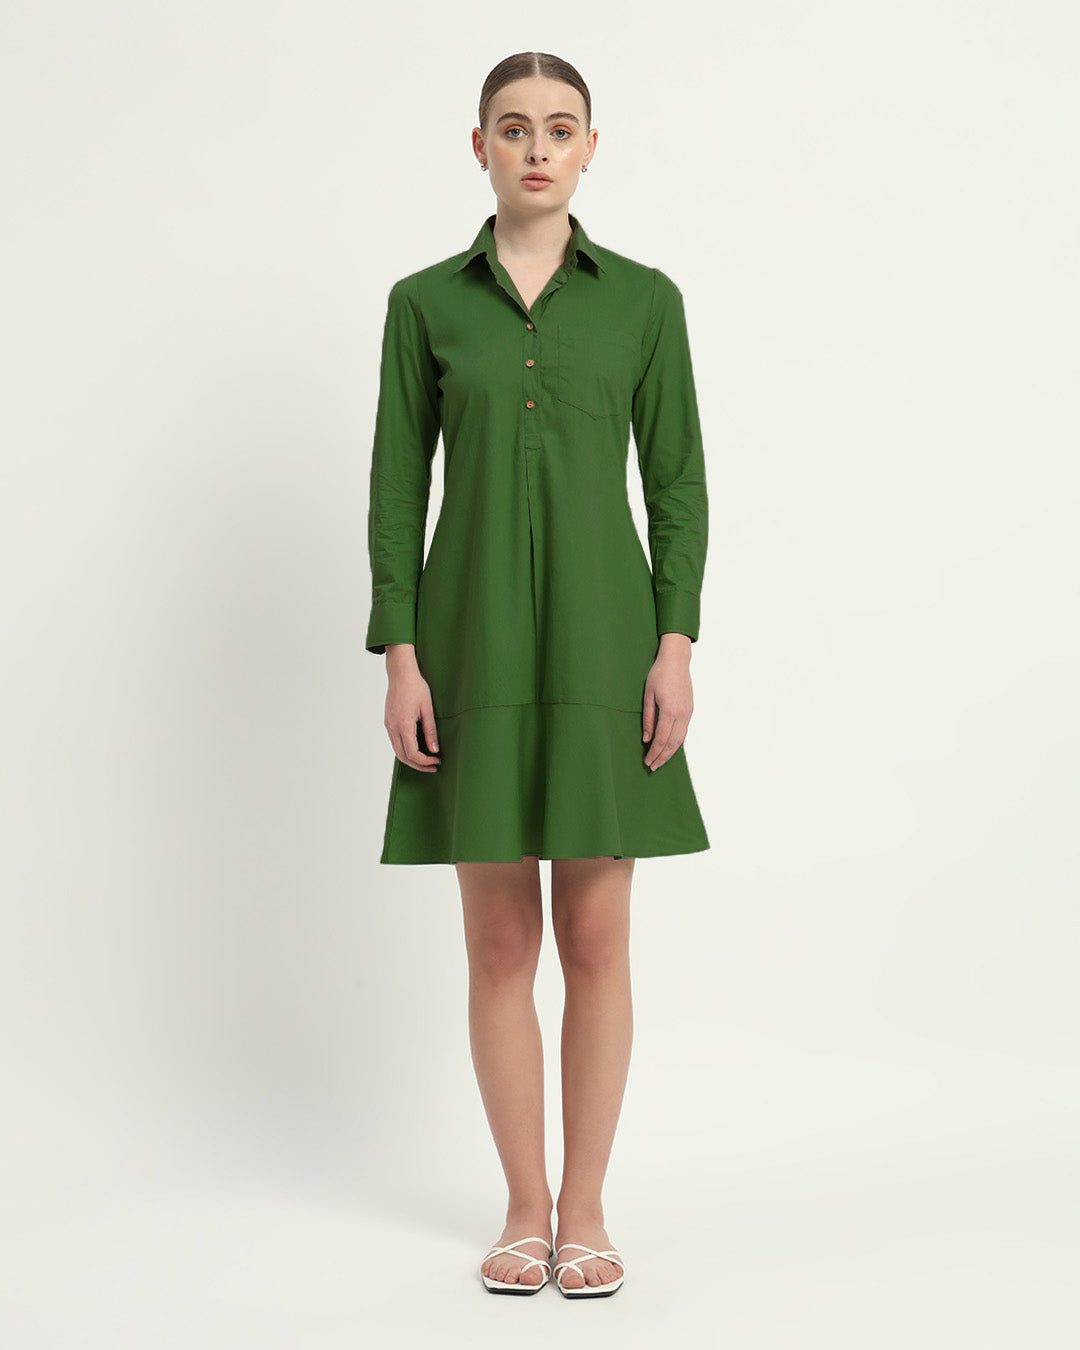 The Lyon Emerald Cotton Dress